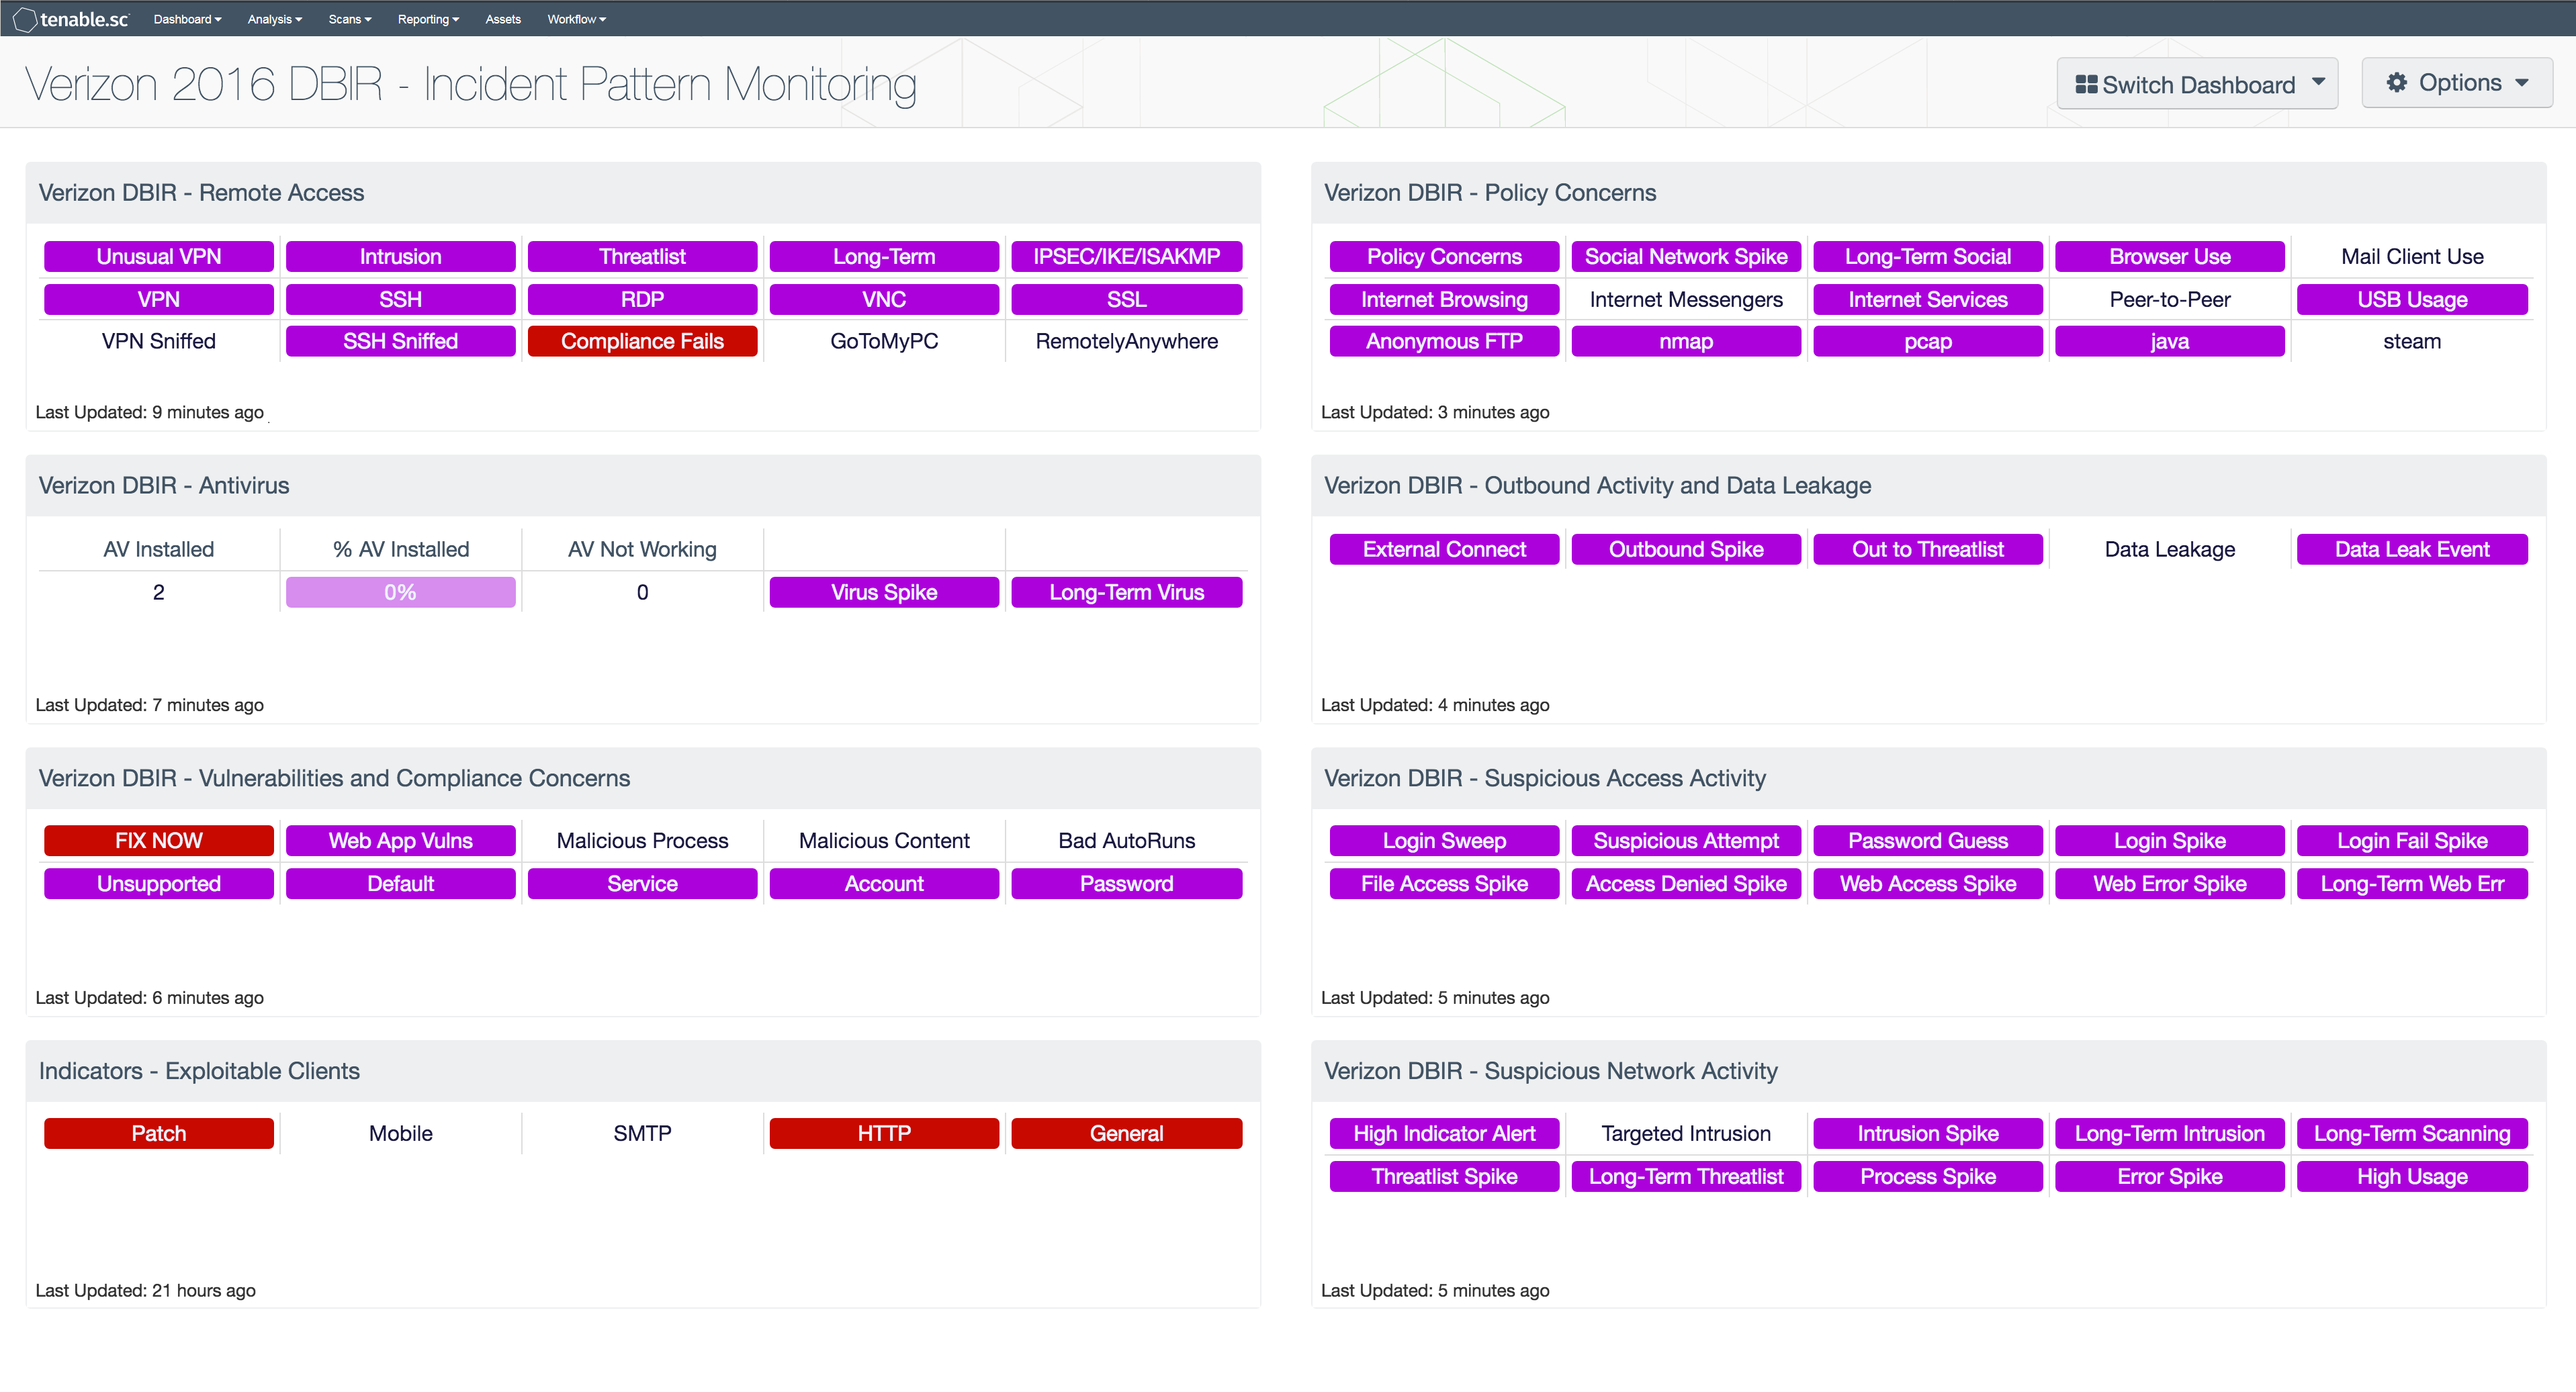 Verizon 2016 DBIR - Incident Pattern Monitoring Dashboard Screenshot